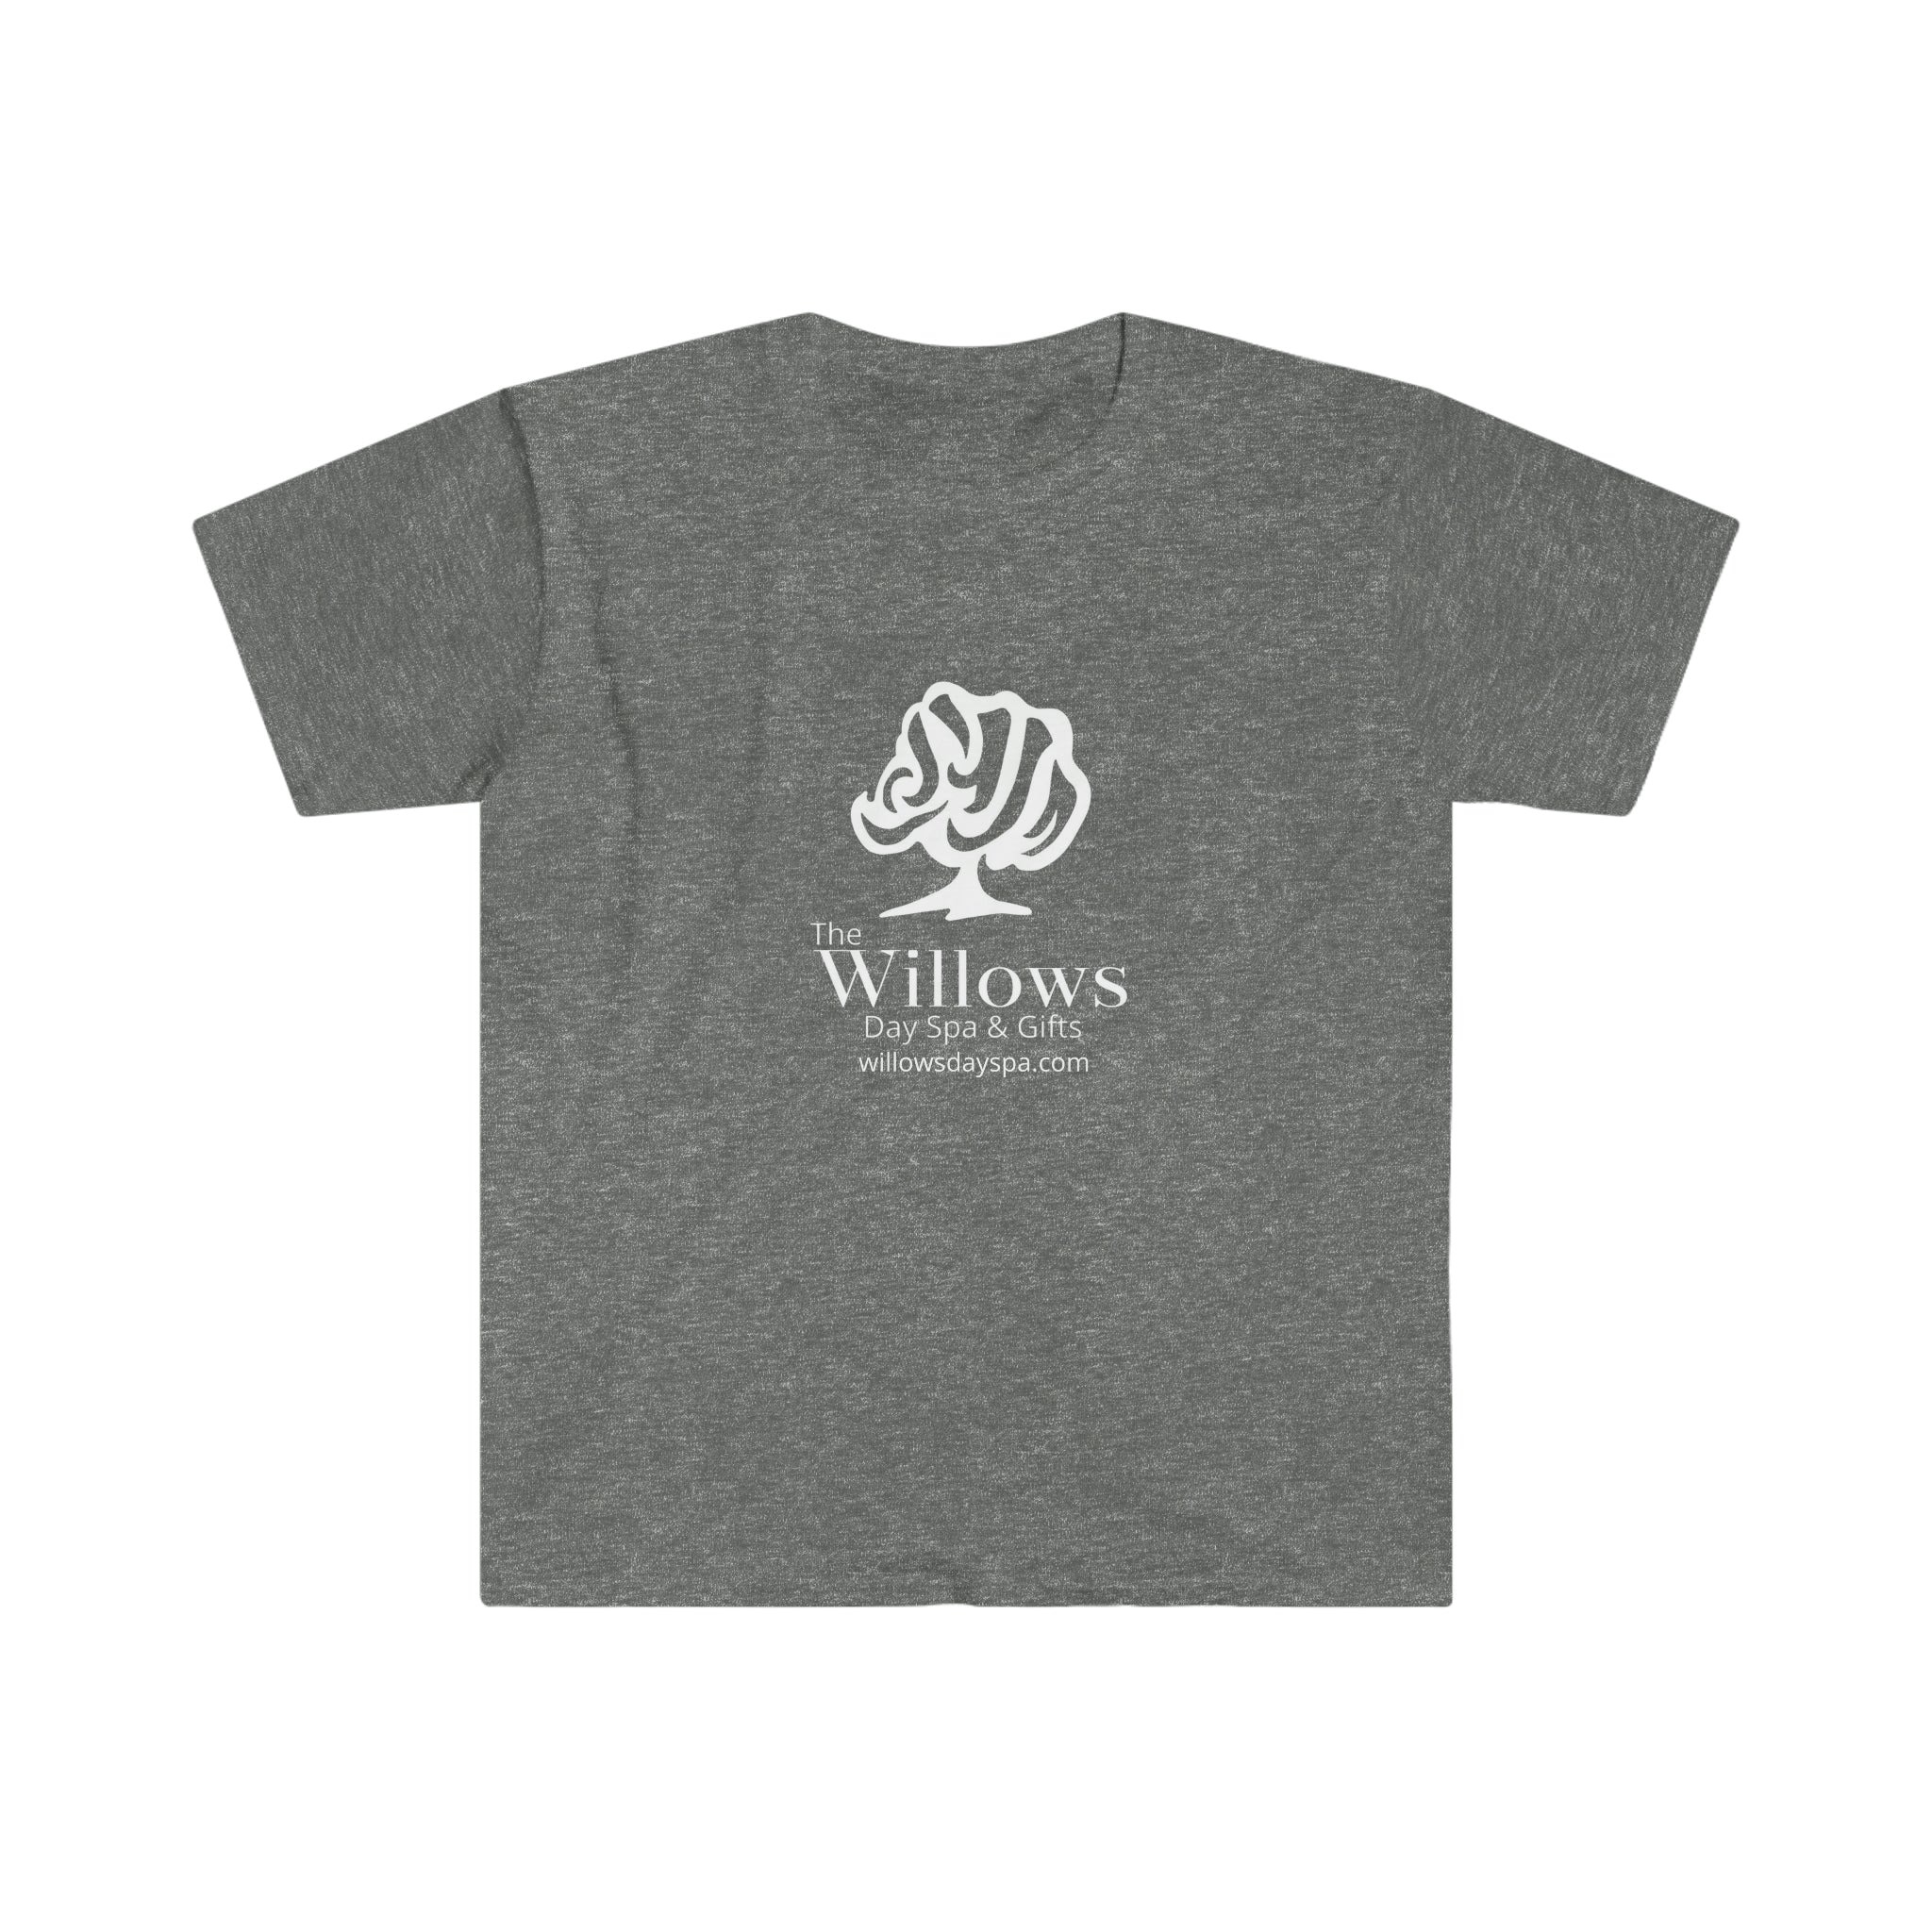 Willows Tee